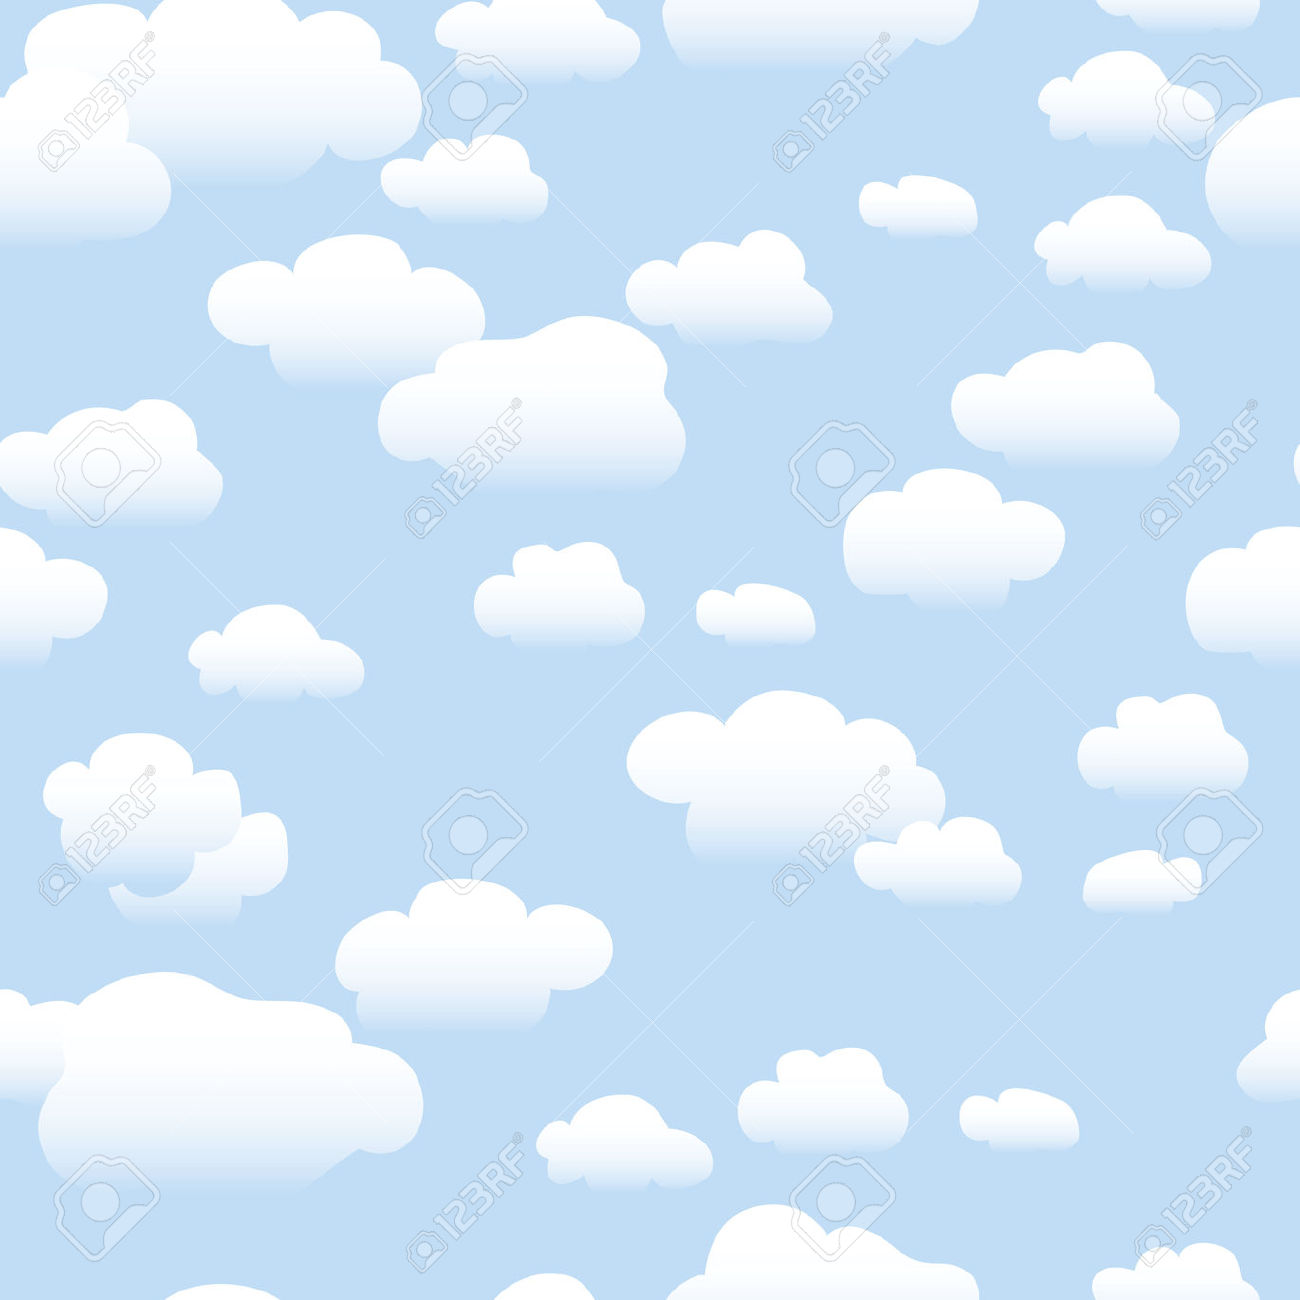 cloud clipart background - photo #22